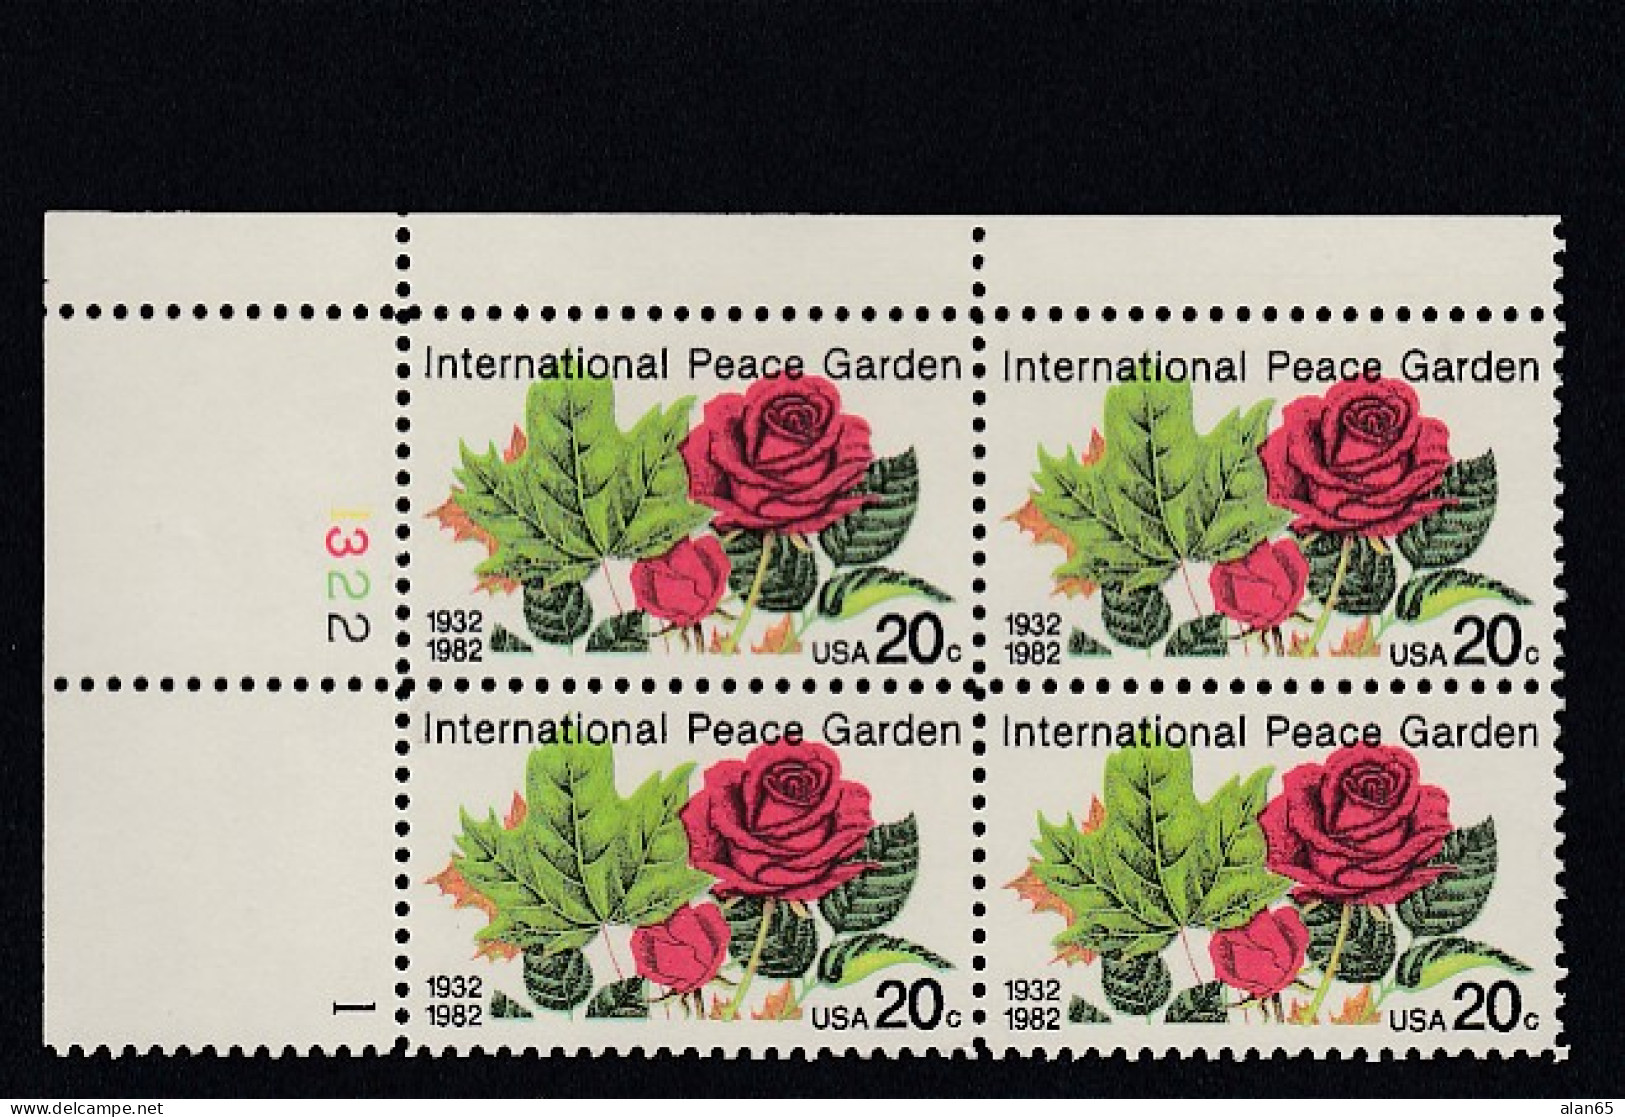 Sc#2014, Plate # Block Of 4 20-cent, International Peace Garden, Flowers Rose, US Postage Stamps - Numéros De Planches